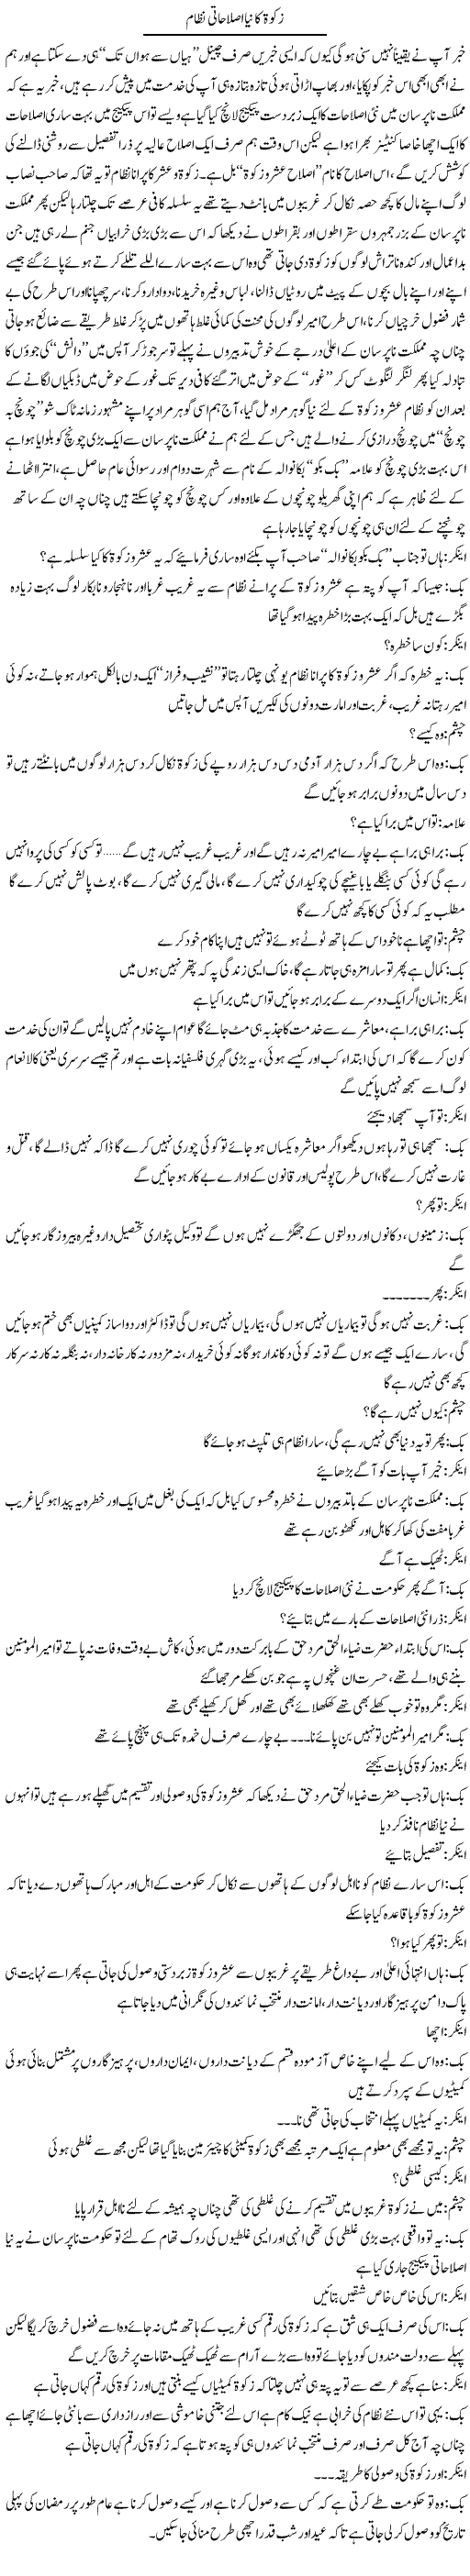 Zakat Ka Naya Islahati Nizam | Saad Ullah Jan Barq | Daily Urdu Columns